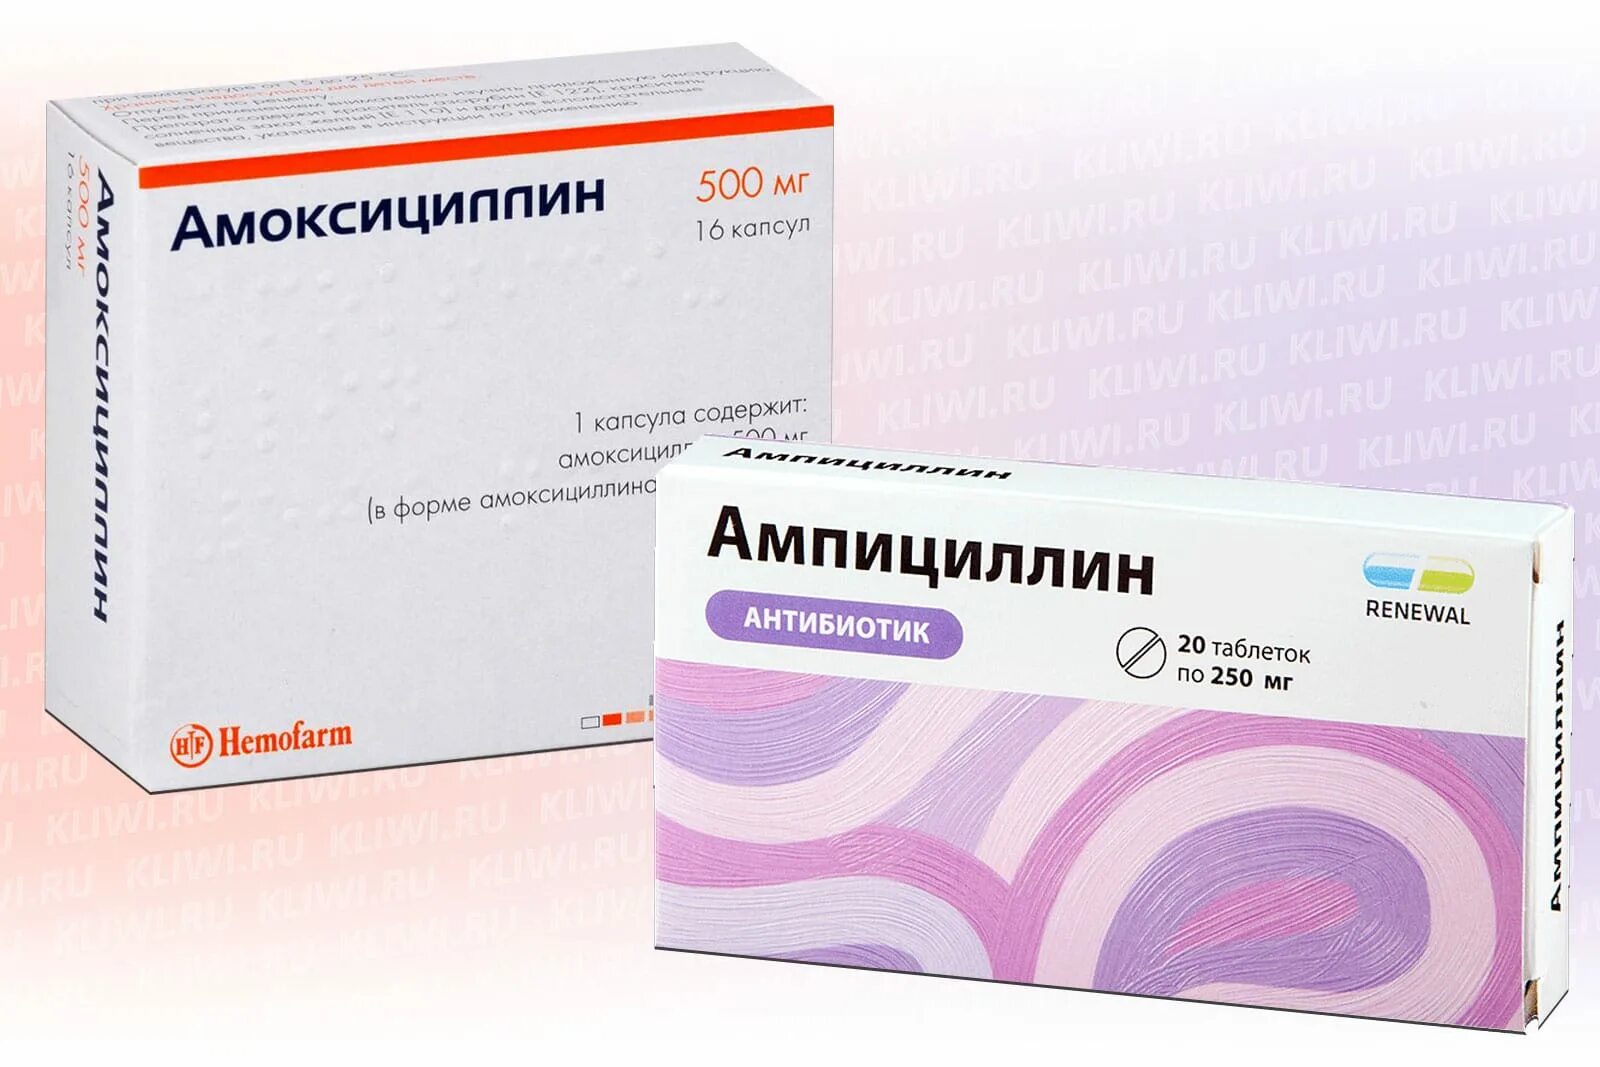 Ампициллин группа антибиотиков